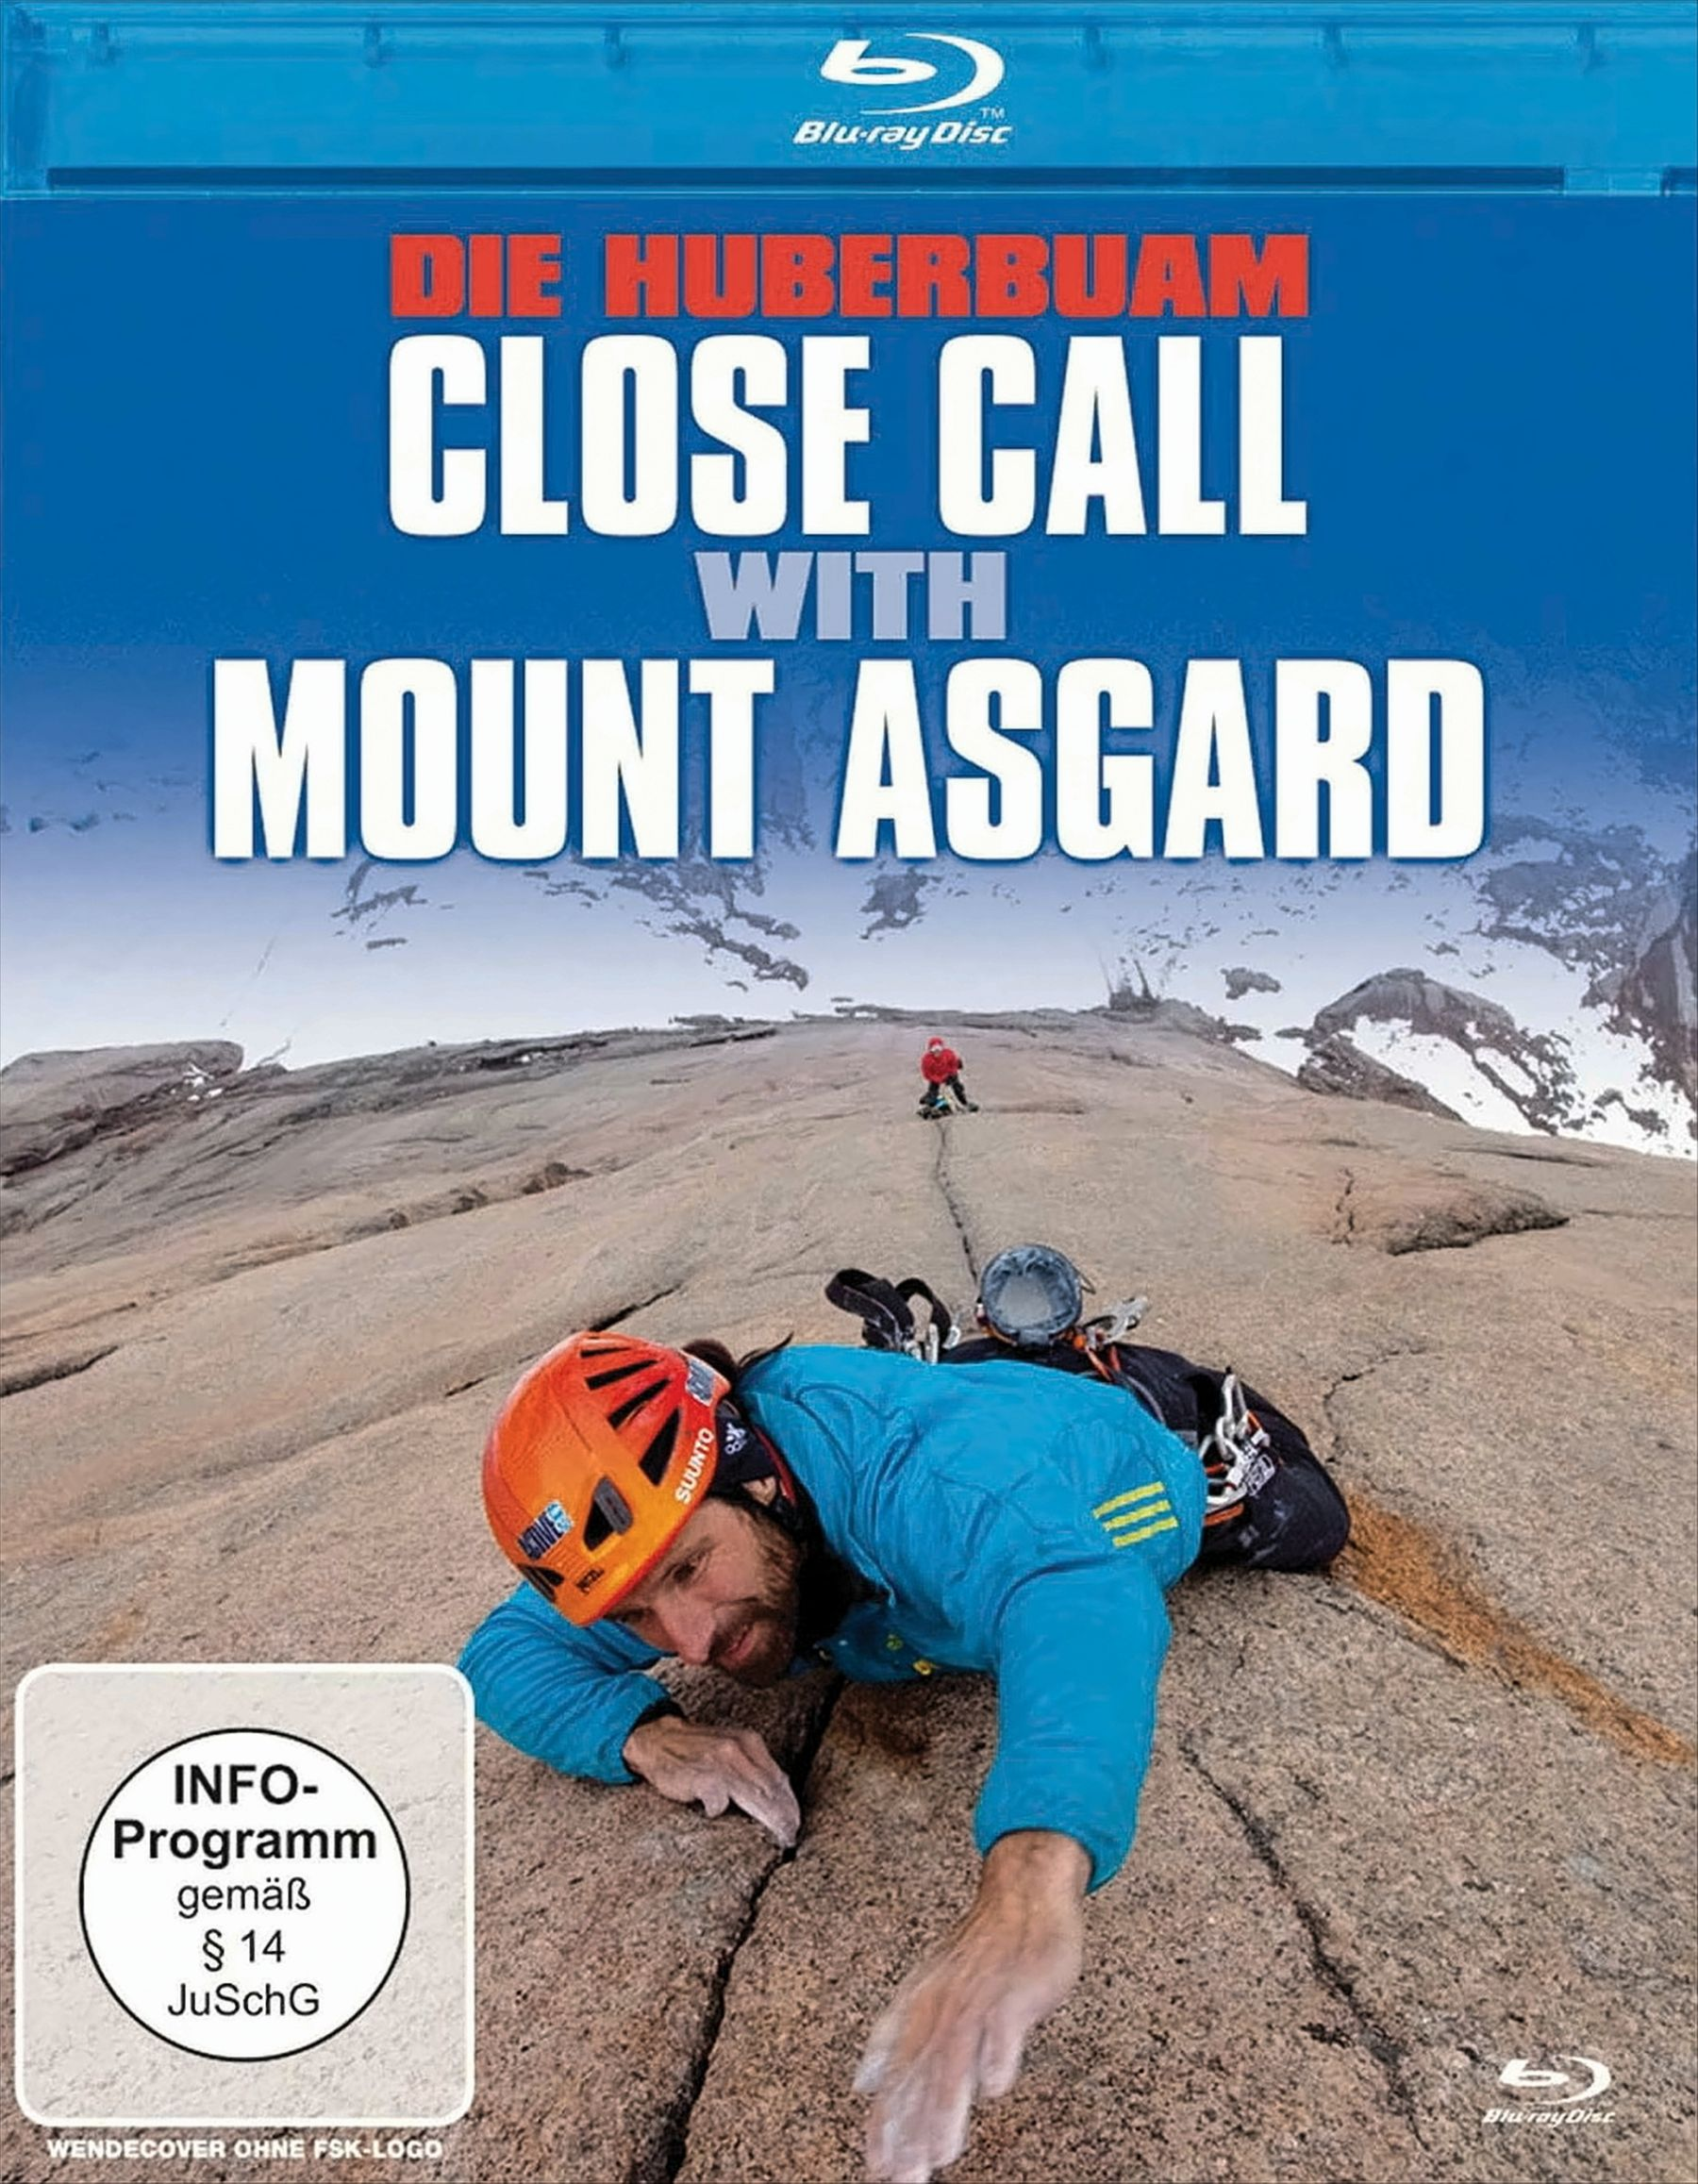 Die Huberbuam Mt. Call Asgard - with Blu-ray Close